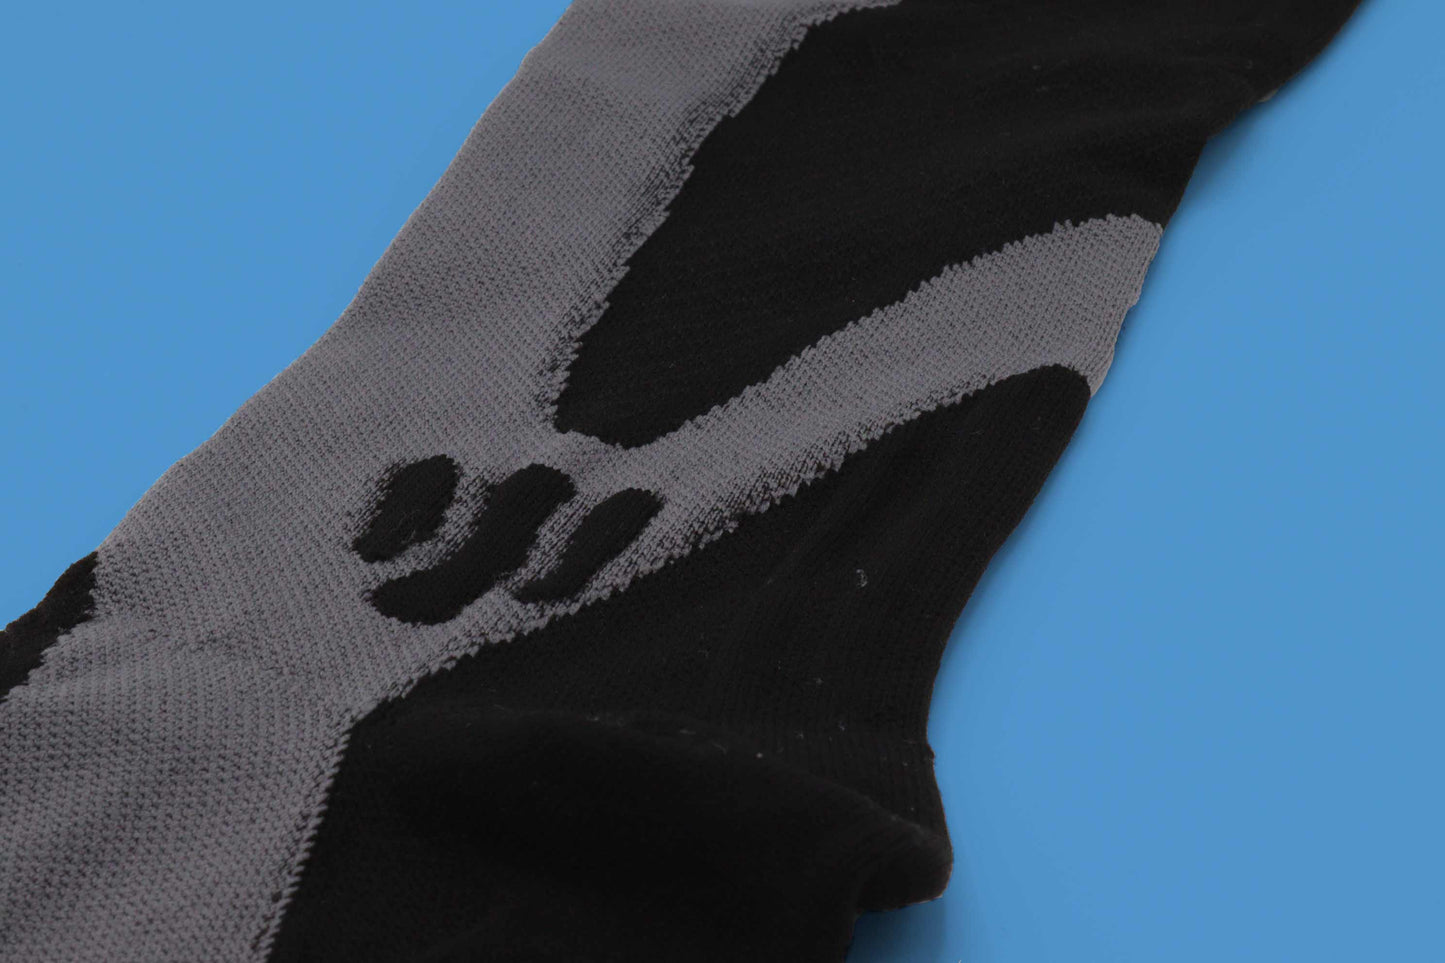 Grey & Black Running Style Compression Socks